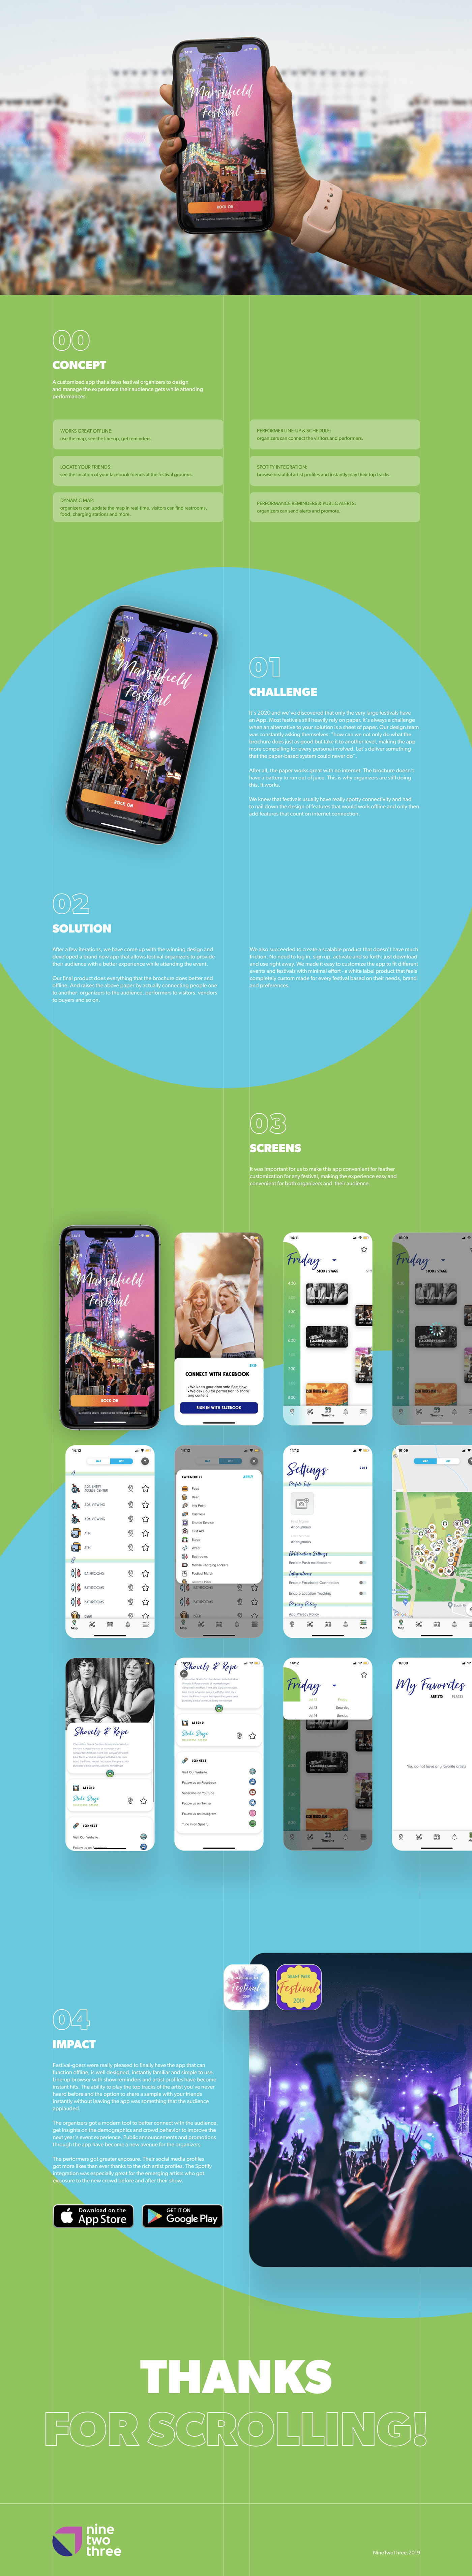 concert festival iphone location mobile Mobile app music Showtime whitelabel